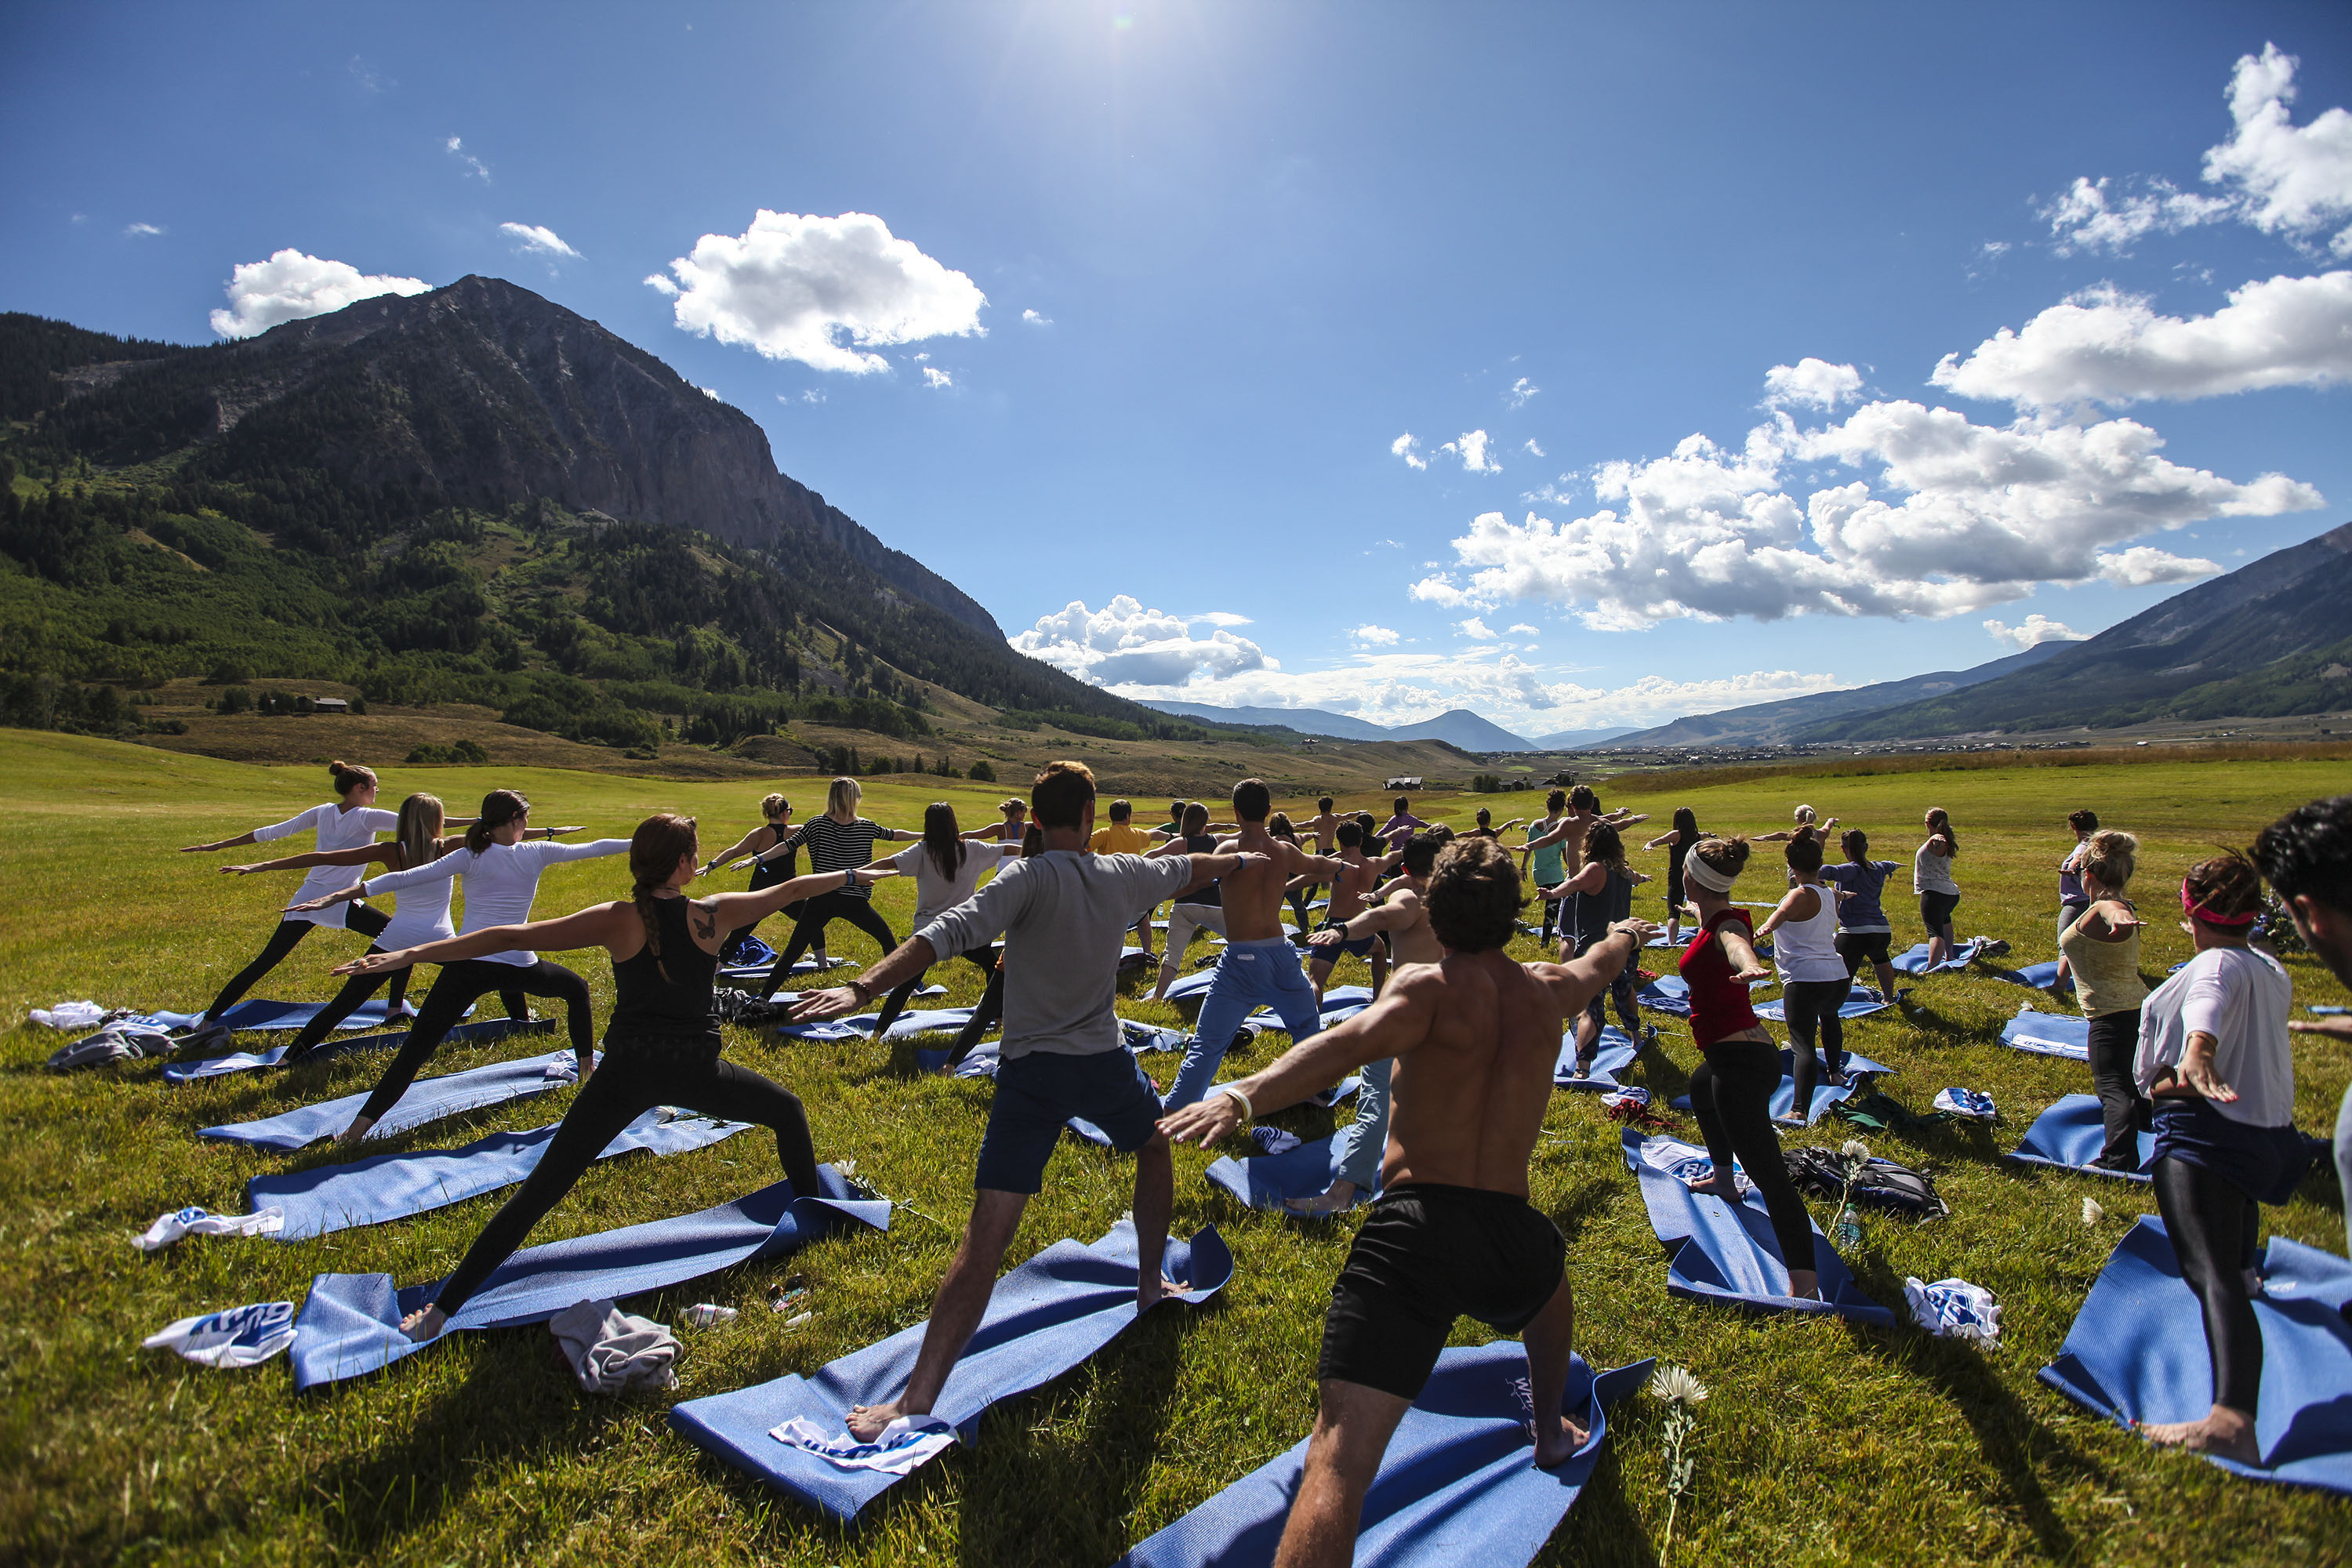 Yoga learners strike a pose in a field near Aspen, Colorado. Image by Jason Bahr / Getty